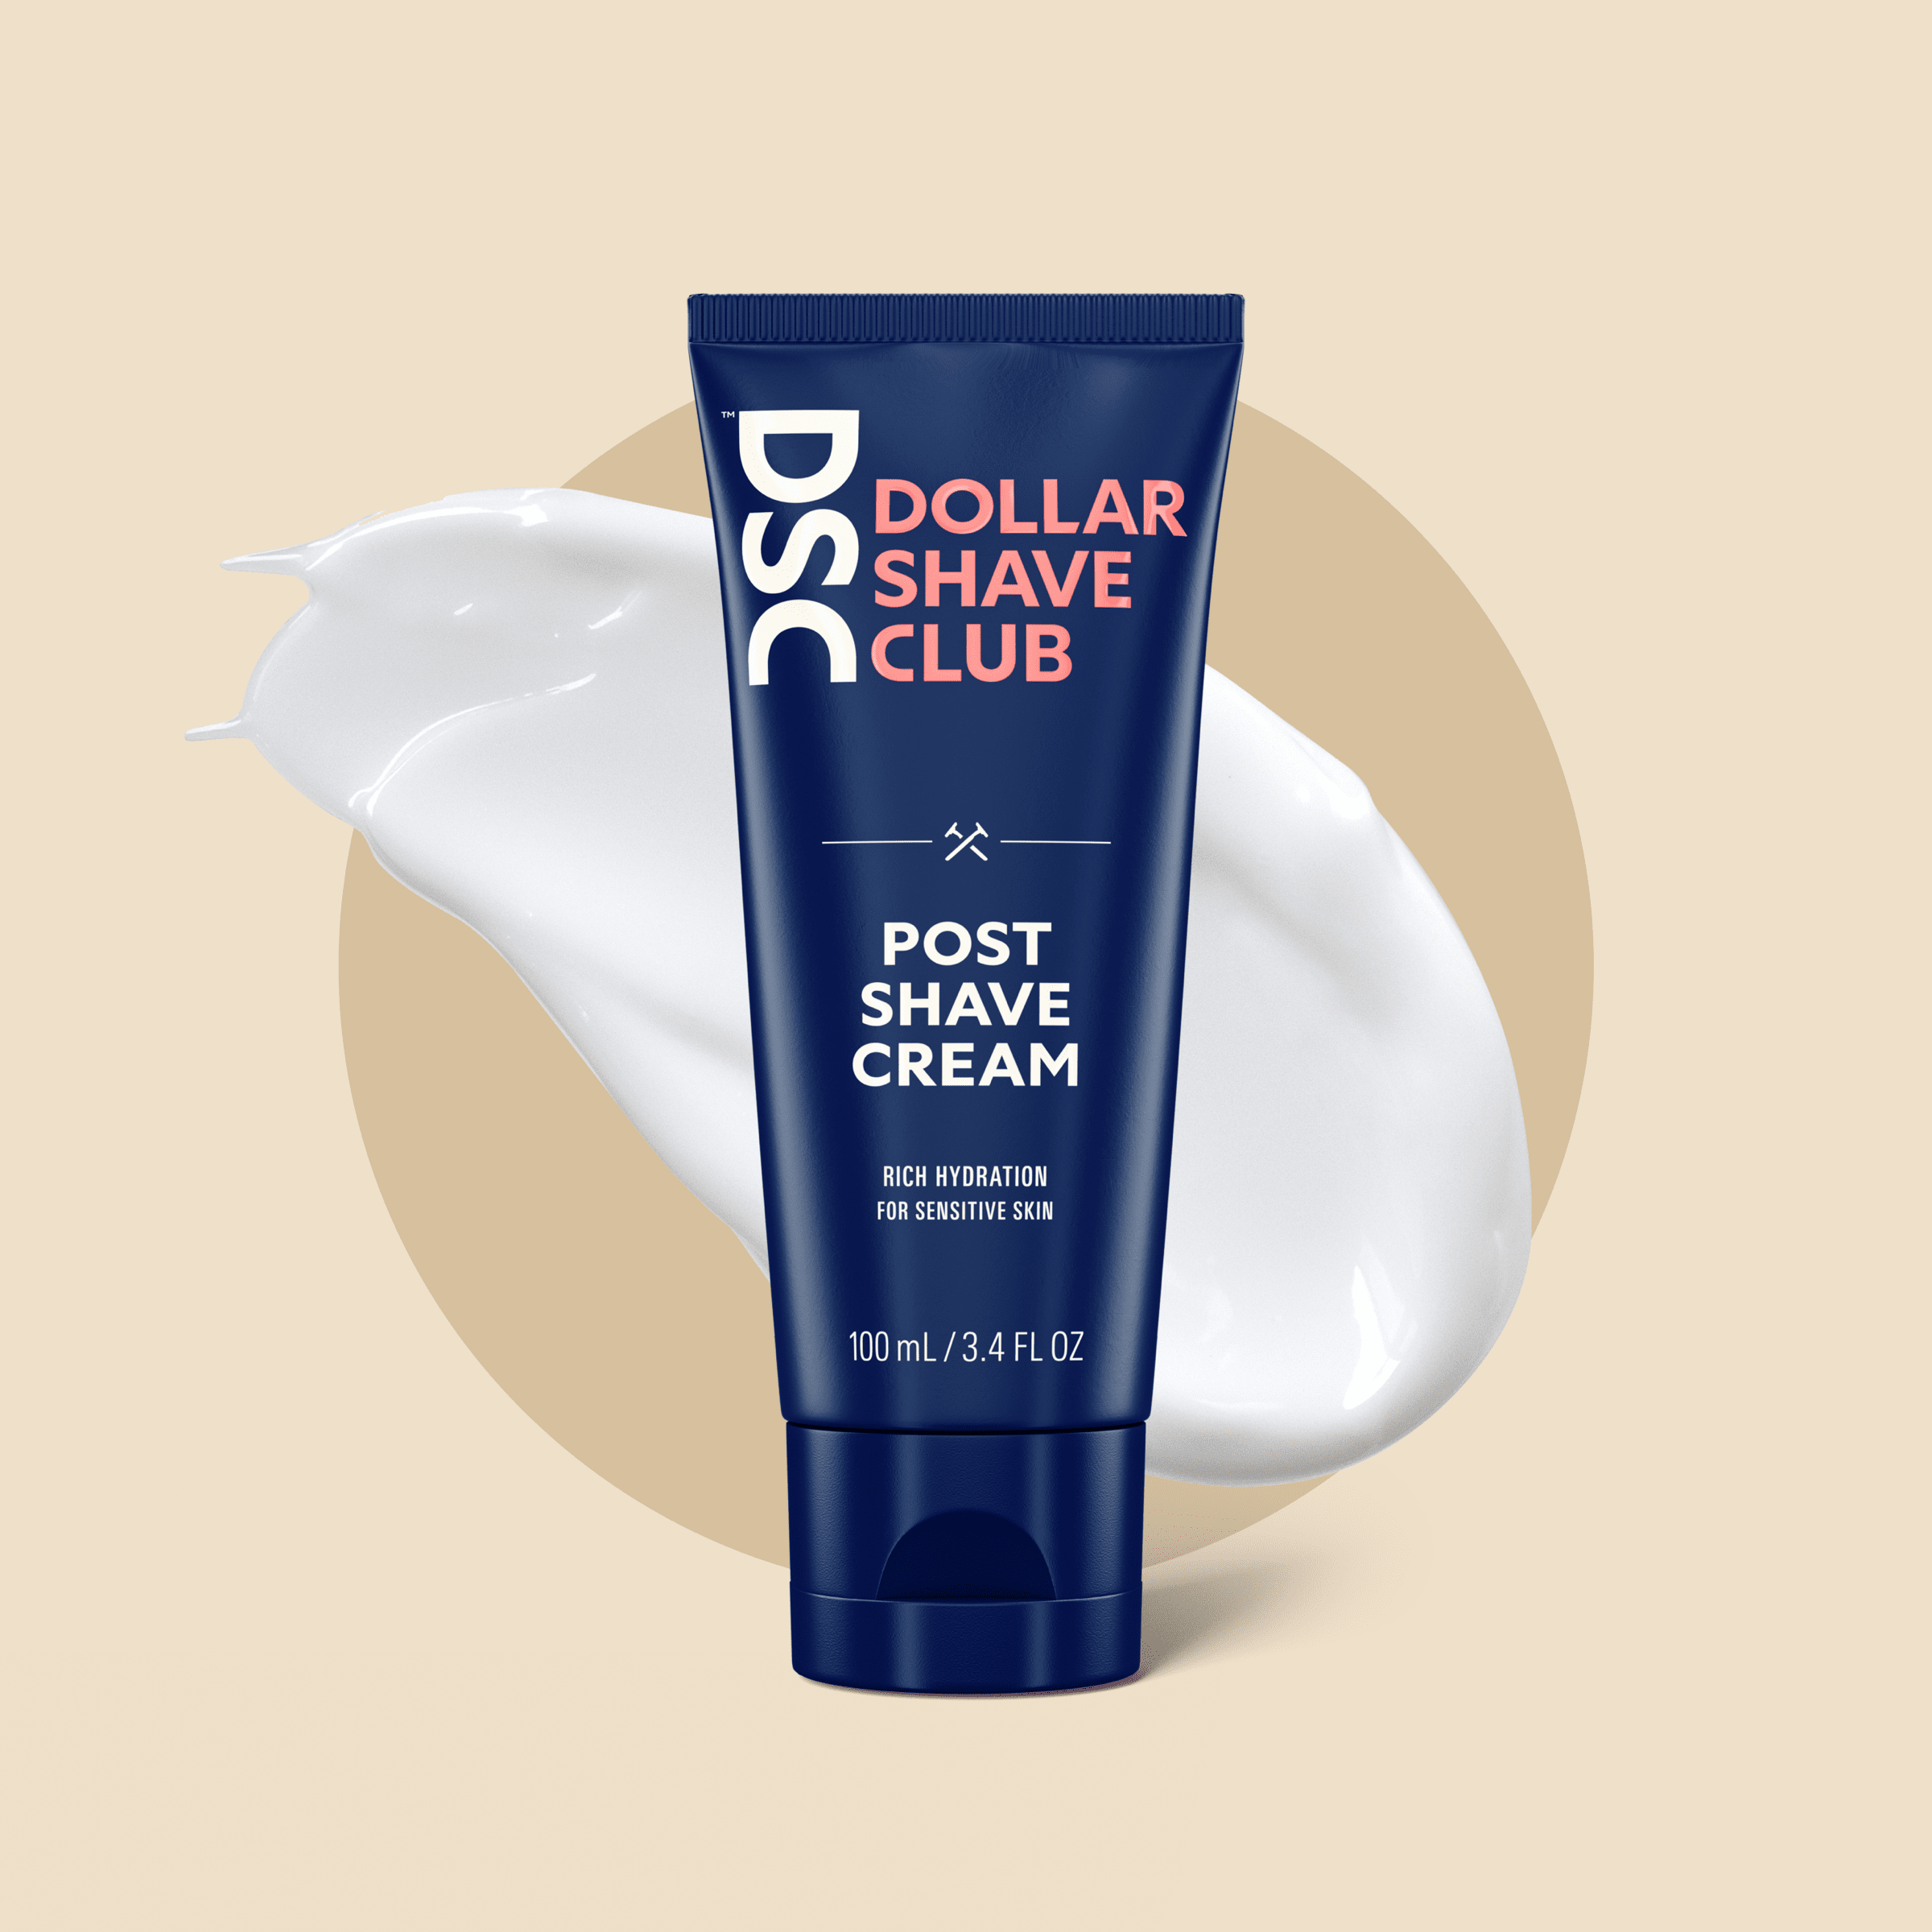 Dollar Shave Club Post Shave Cream texture image.